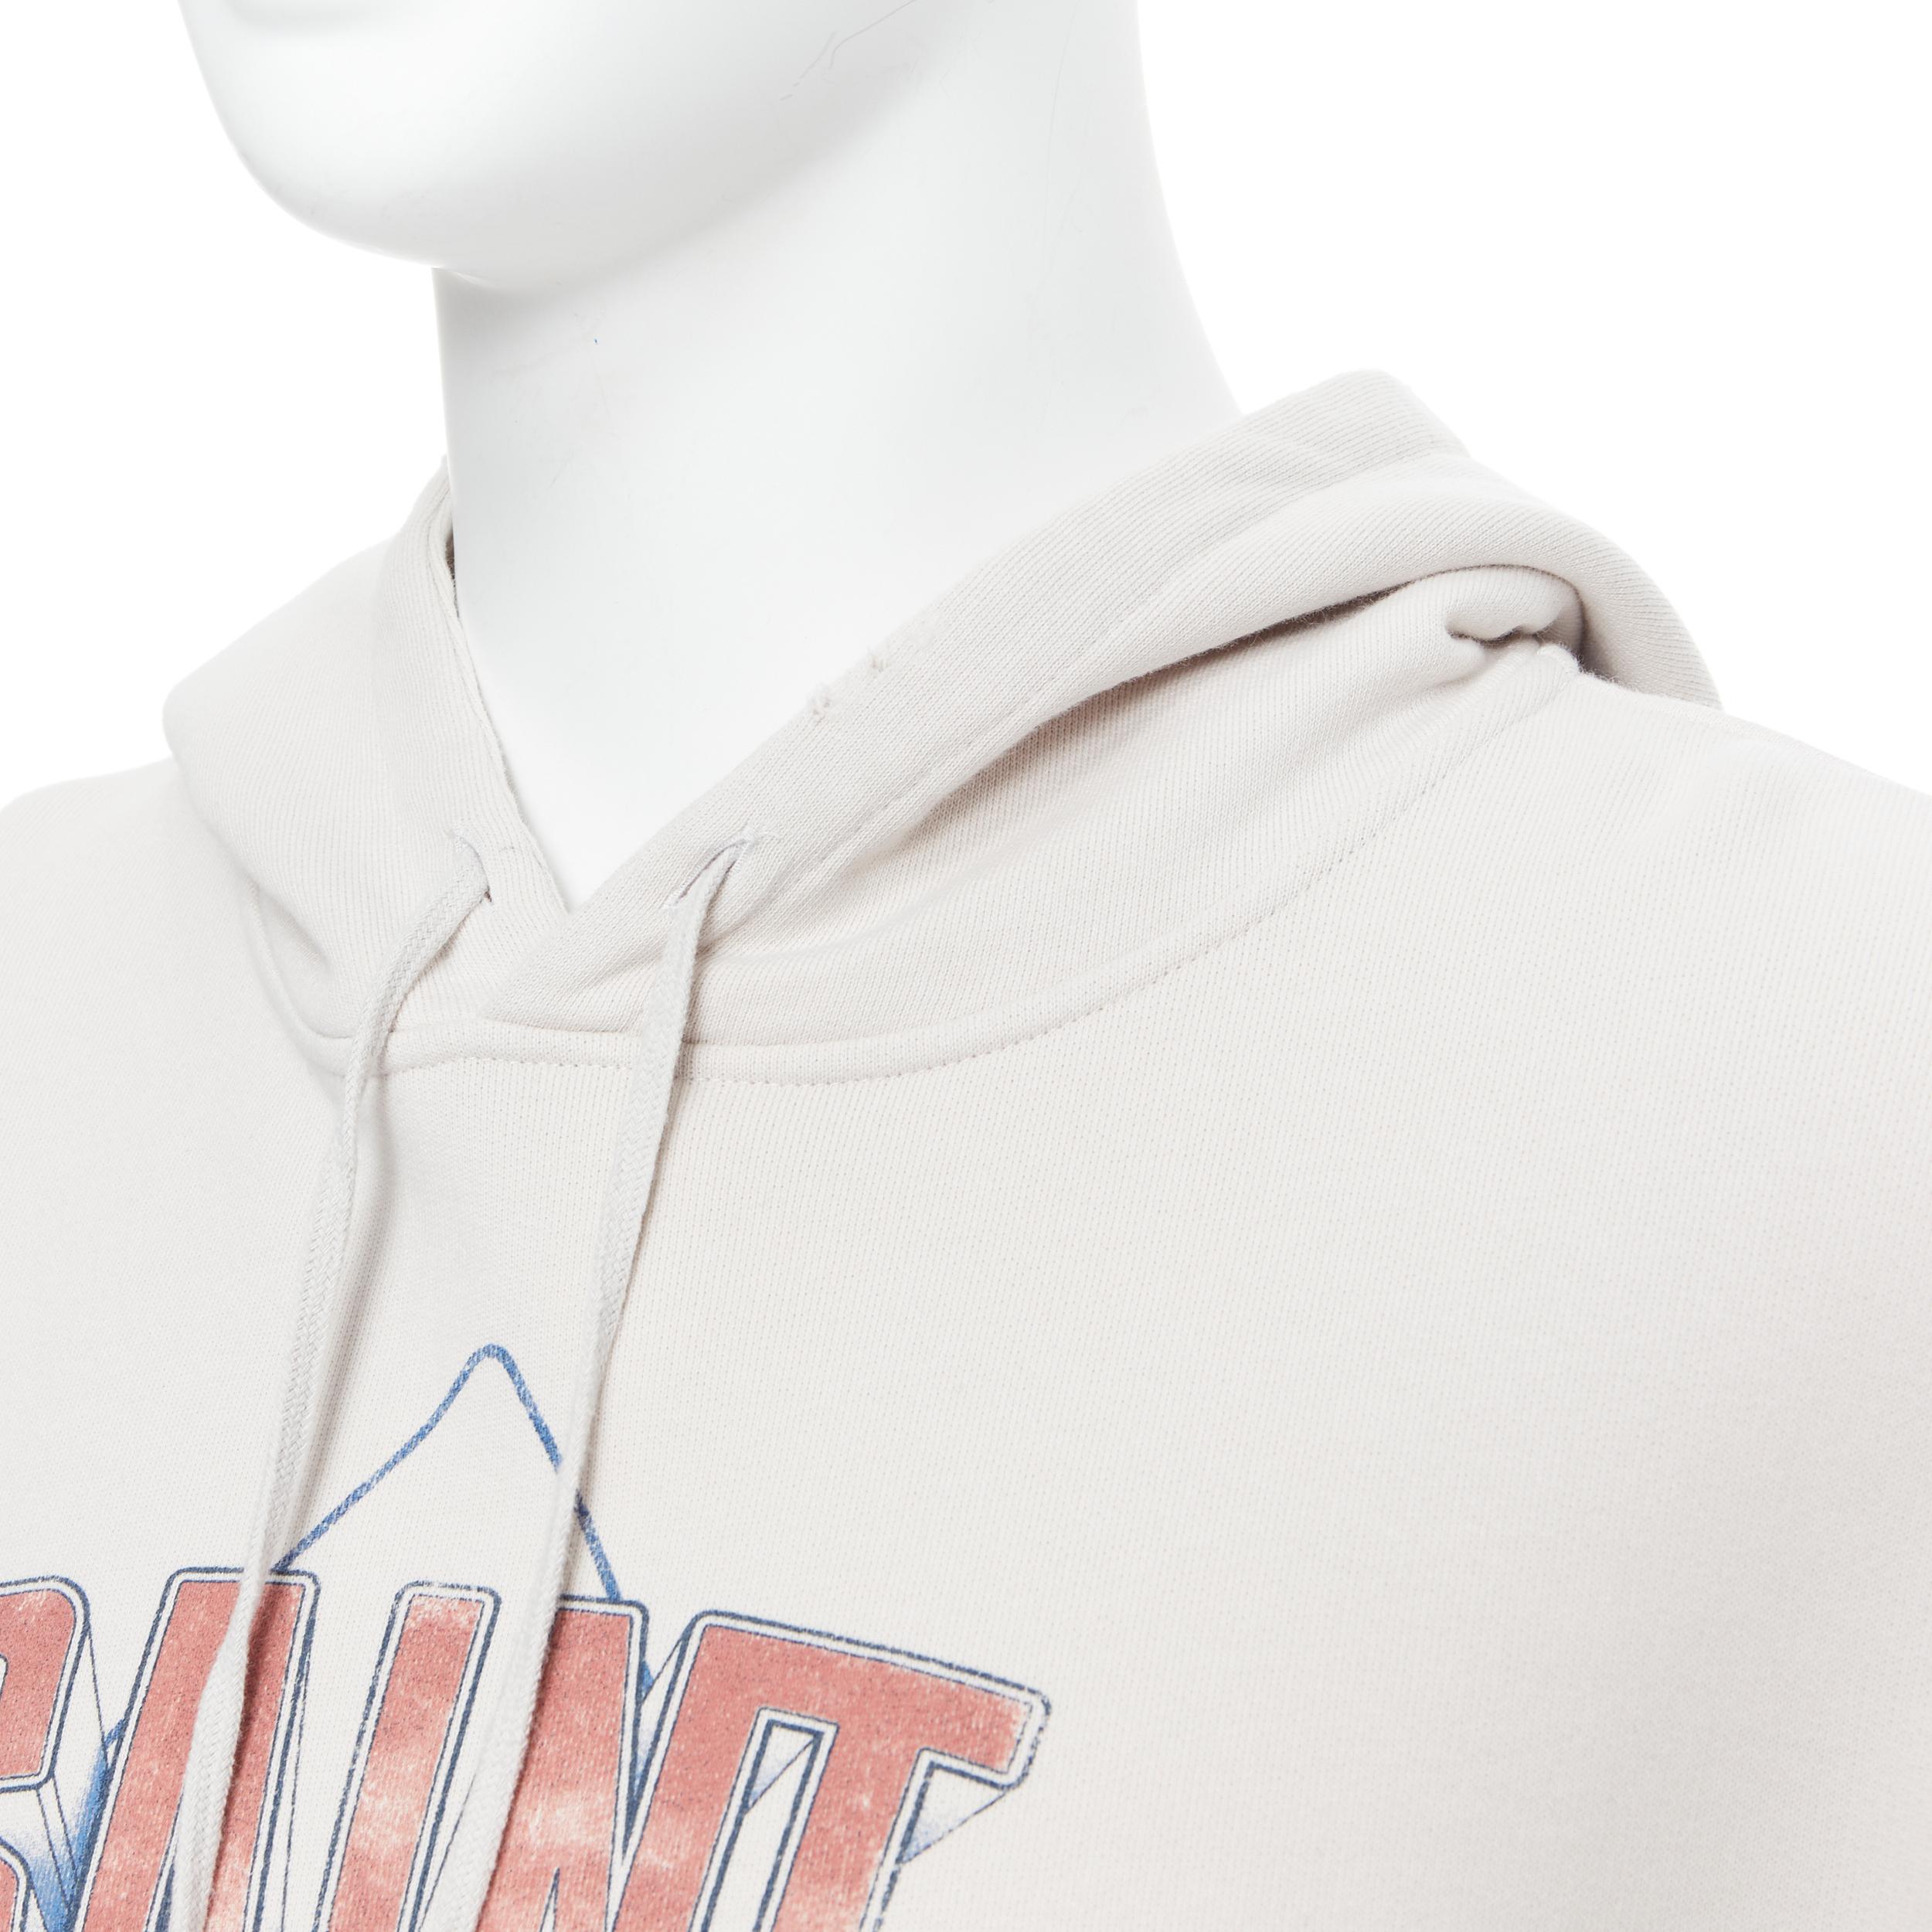 Men's new SAINT LAURENT 2019 Robot Logo print vintage distressed destroyed hoodie S